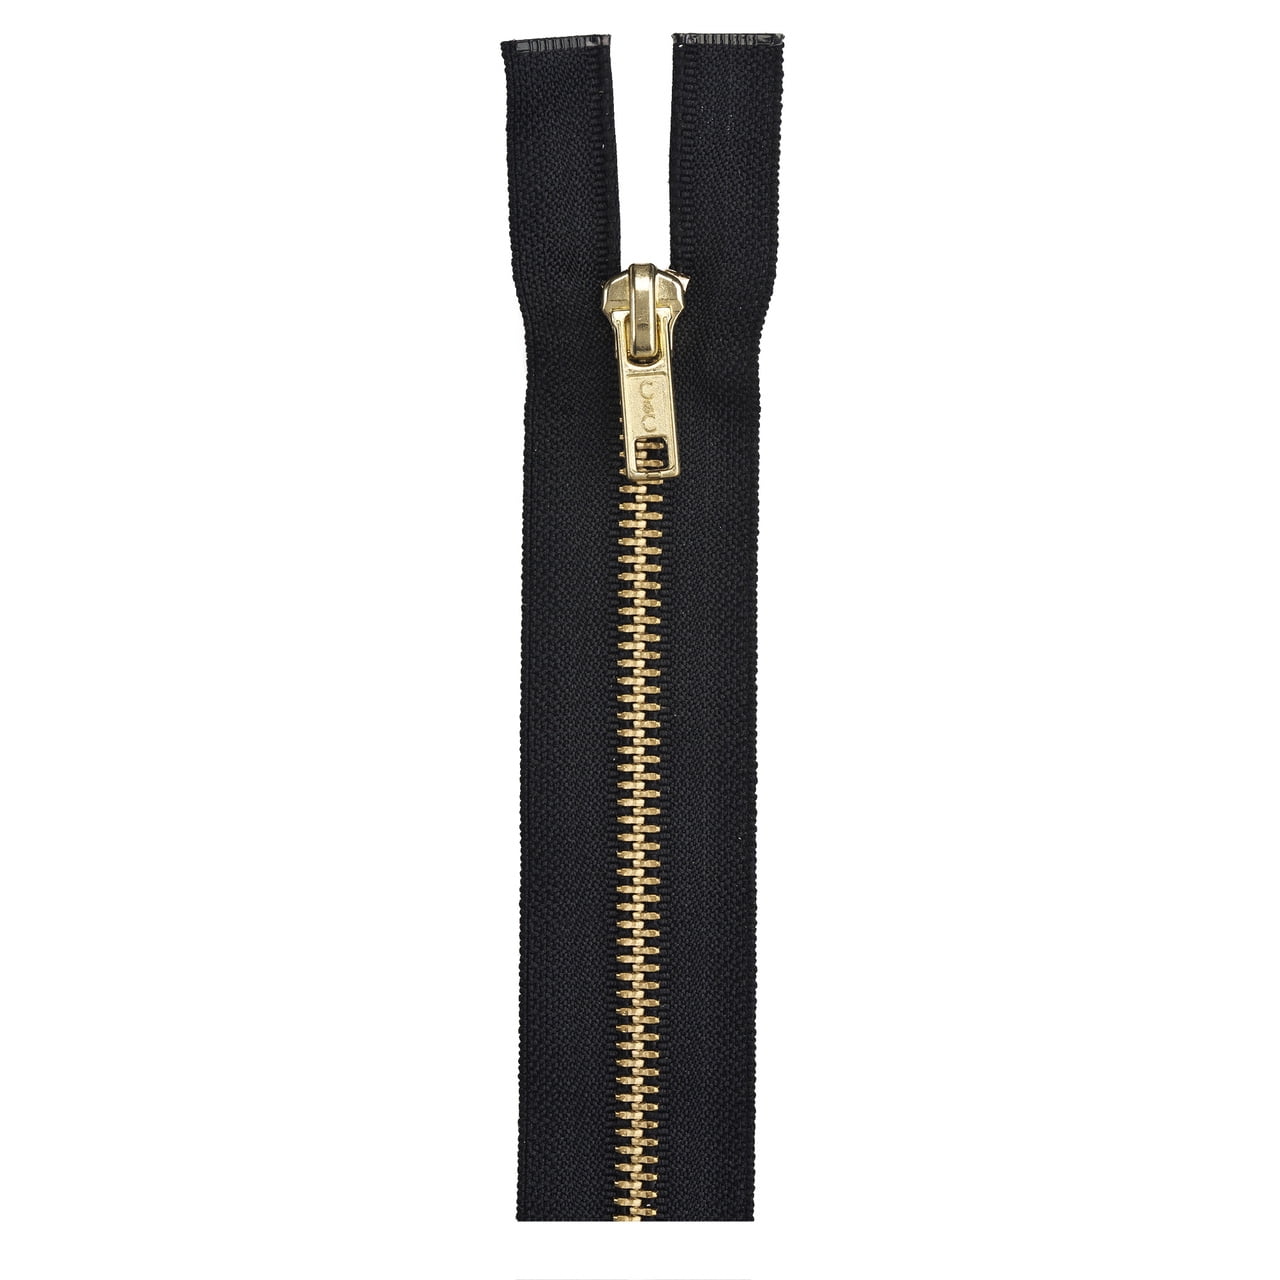 24 inch Metal Zipper White 24” Silver Brass Metal Heavy Duty Zippers Separating Sewing Zipper Craft Zippers